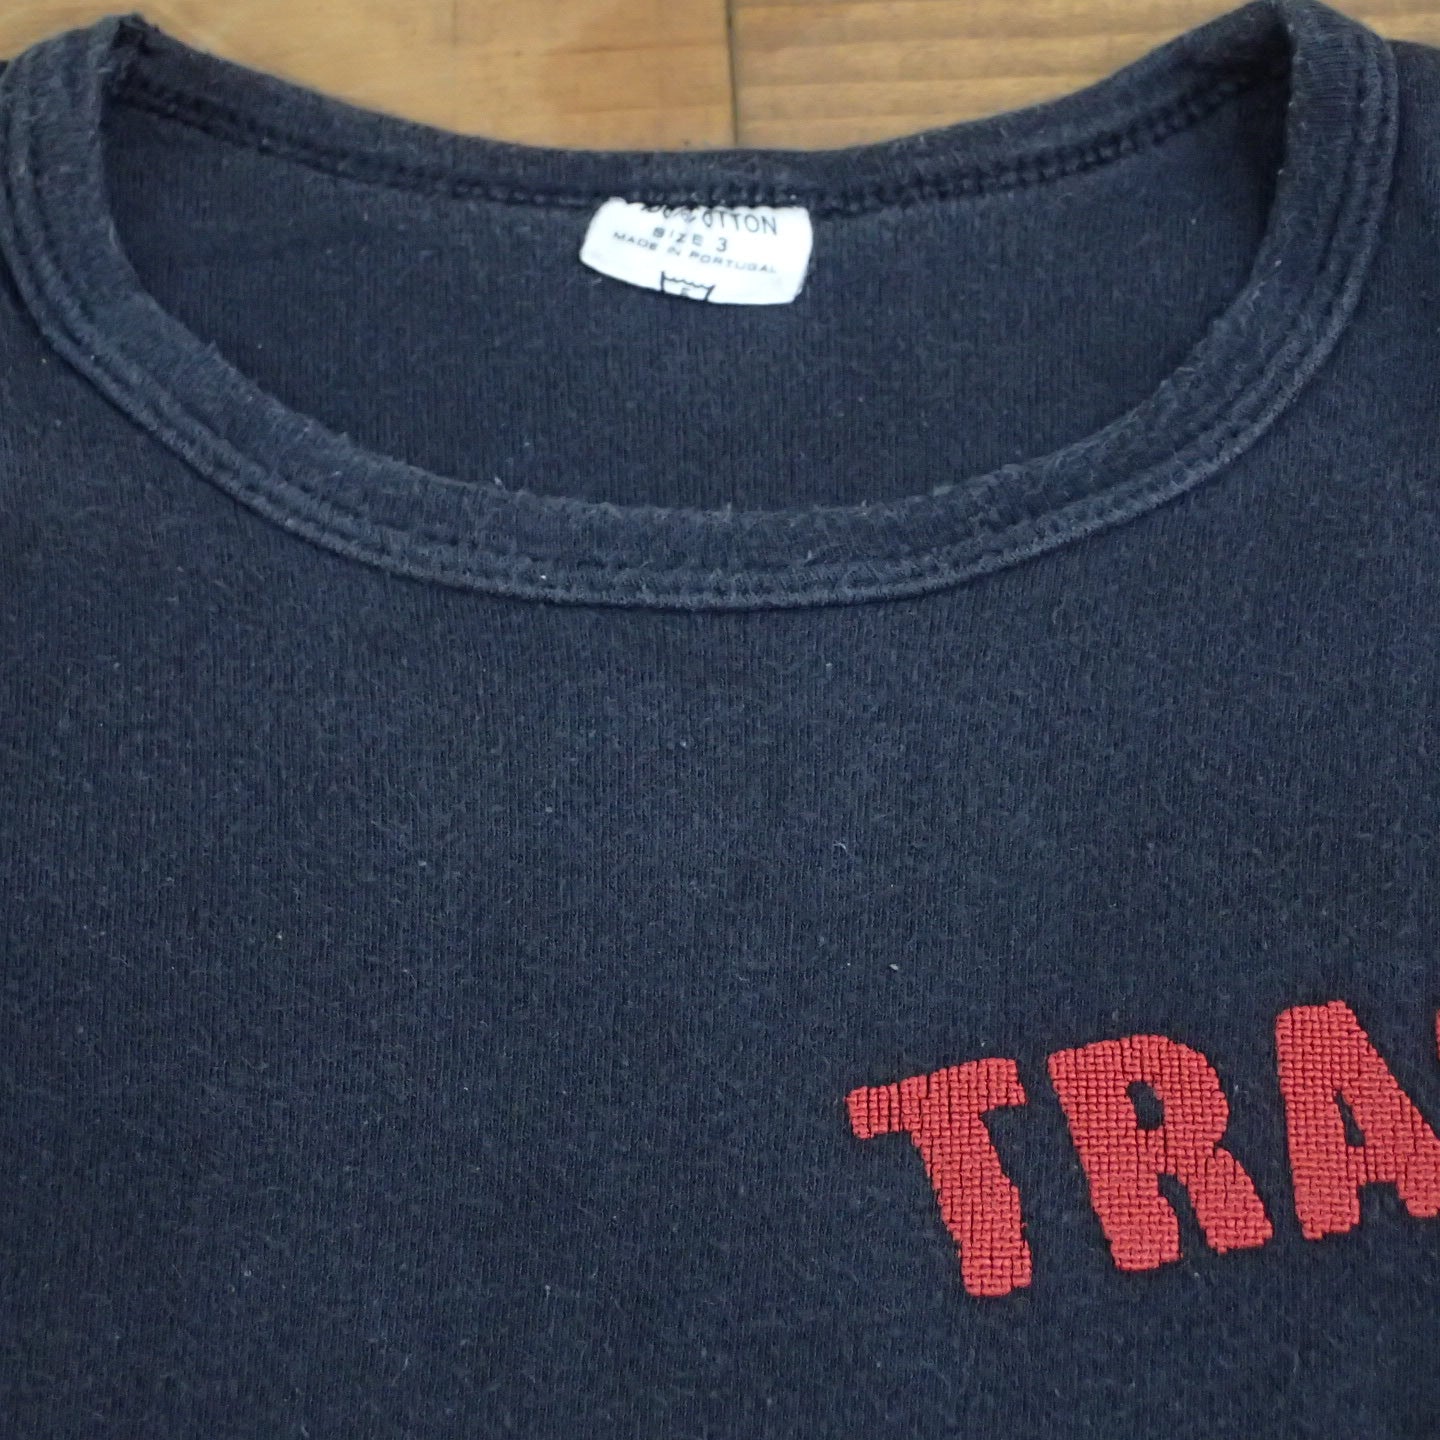 70s Roxy Music T-shirt "Trash Tour Tee"